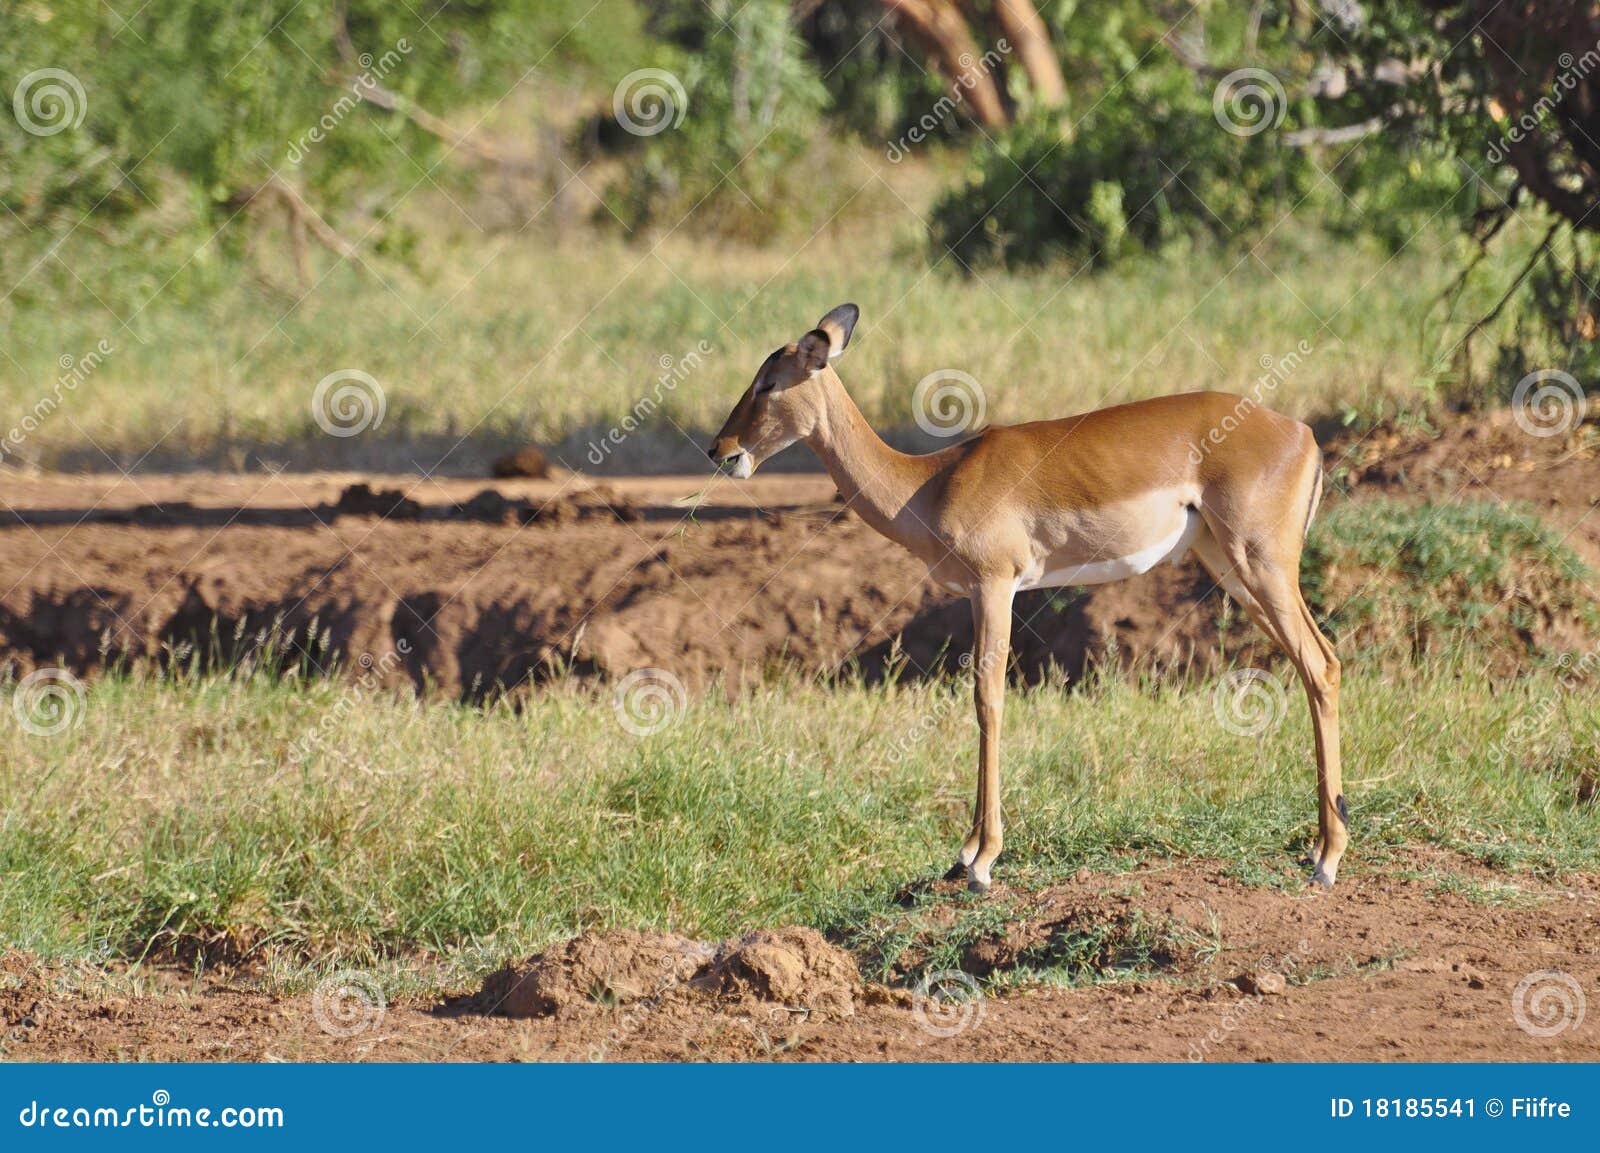 gazelle africa